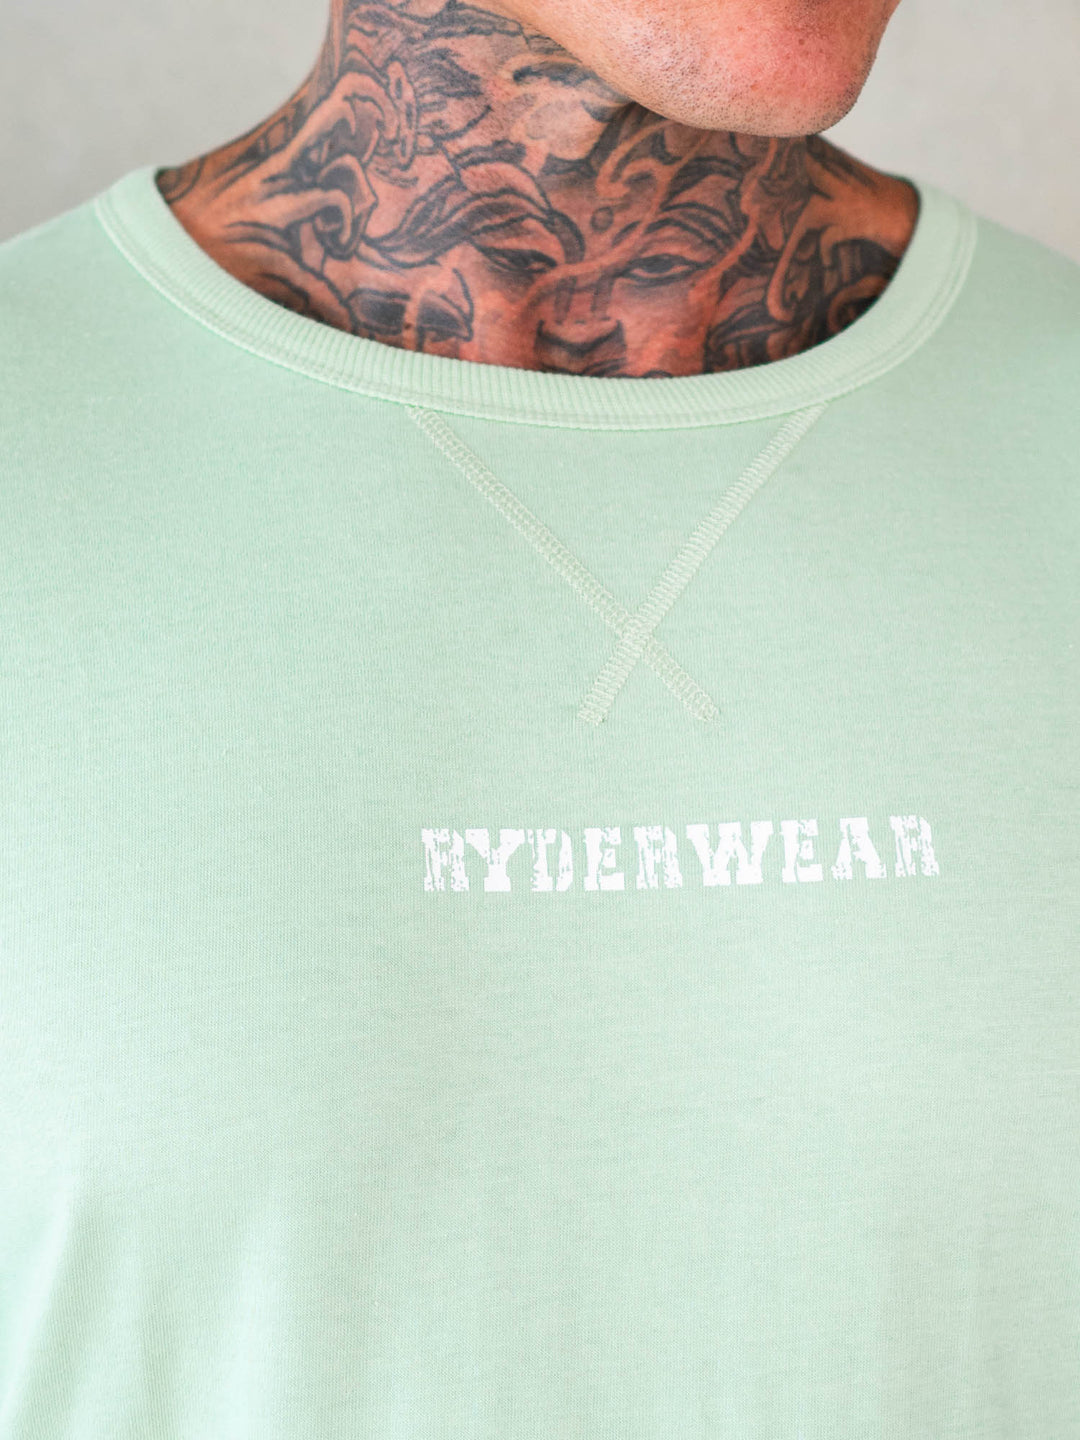 Octane T-Shirt - Mint Clothing Ryderwear 